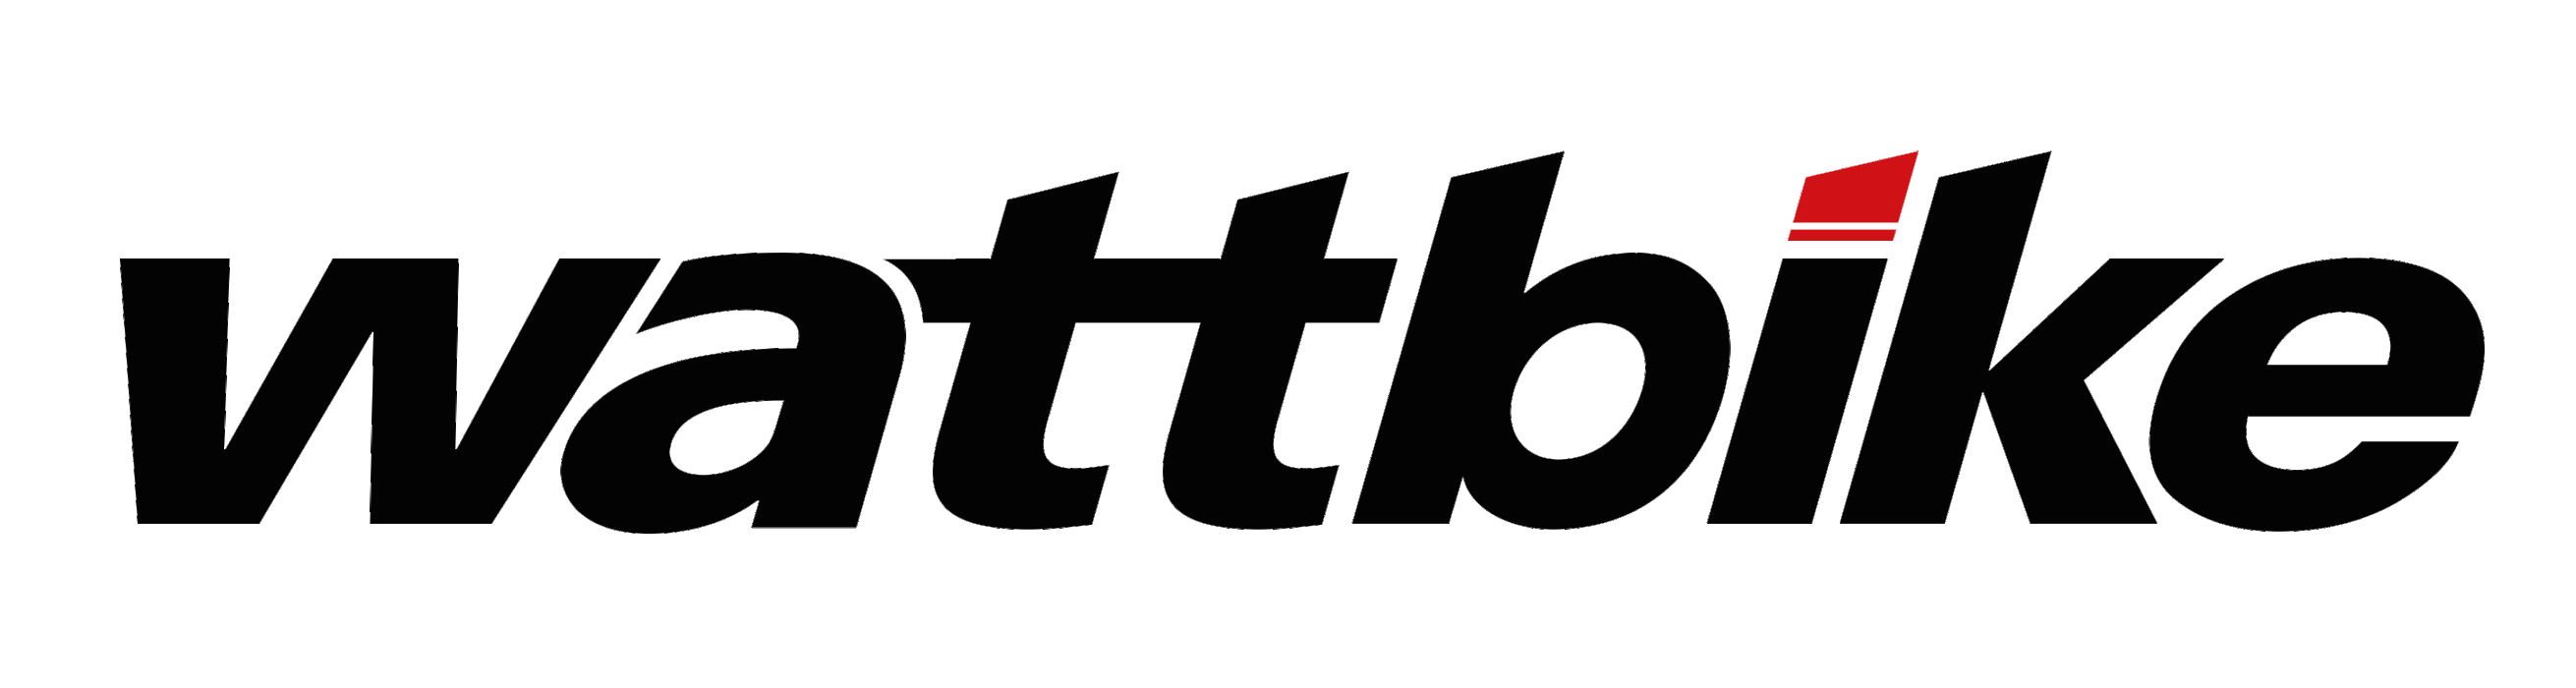 Wattbike-logo-transparent_2621x700